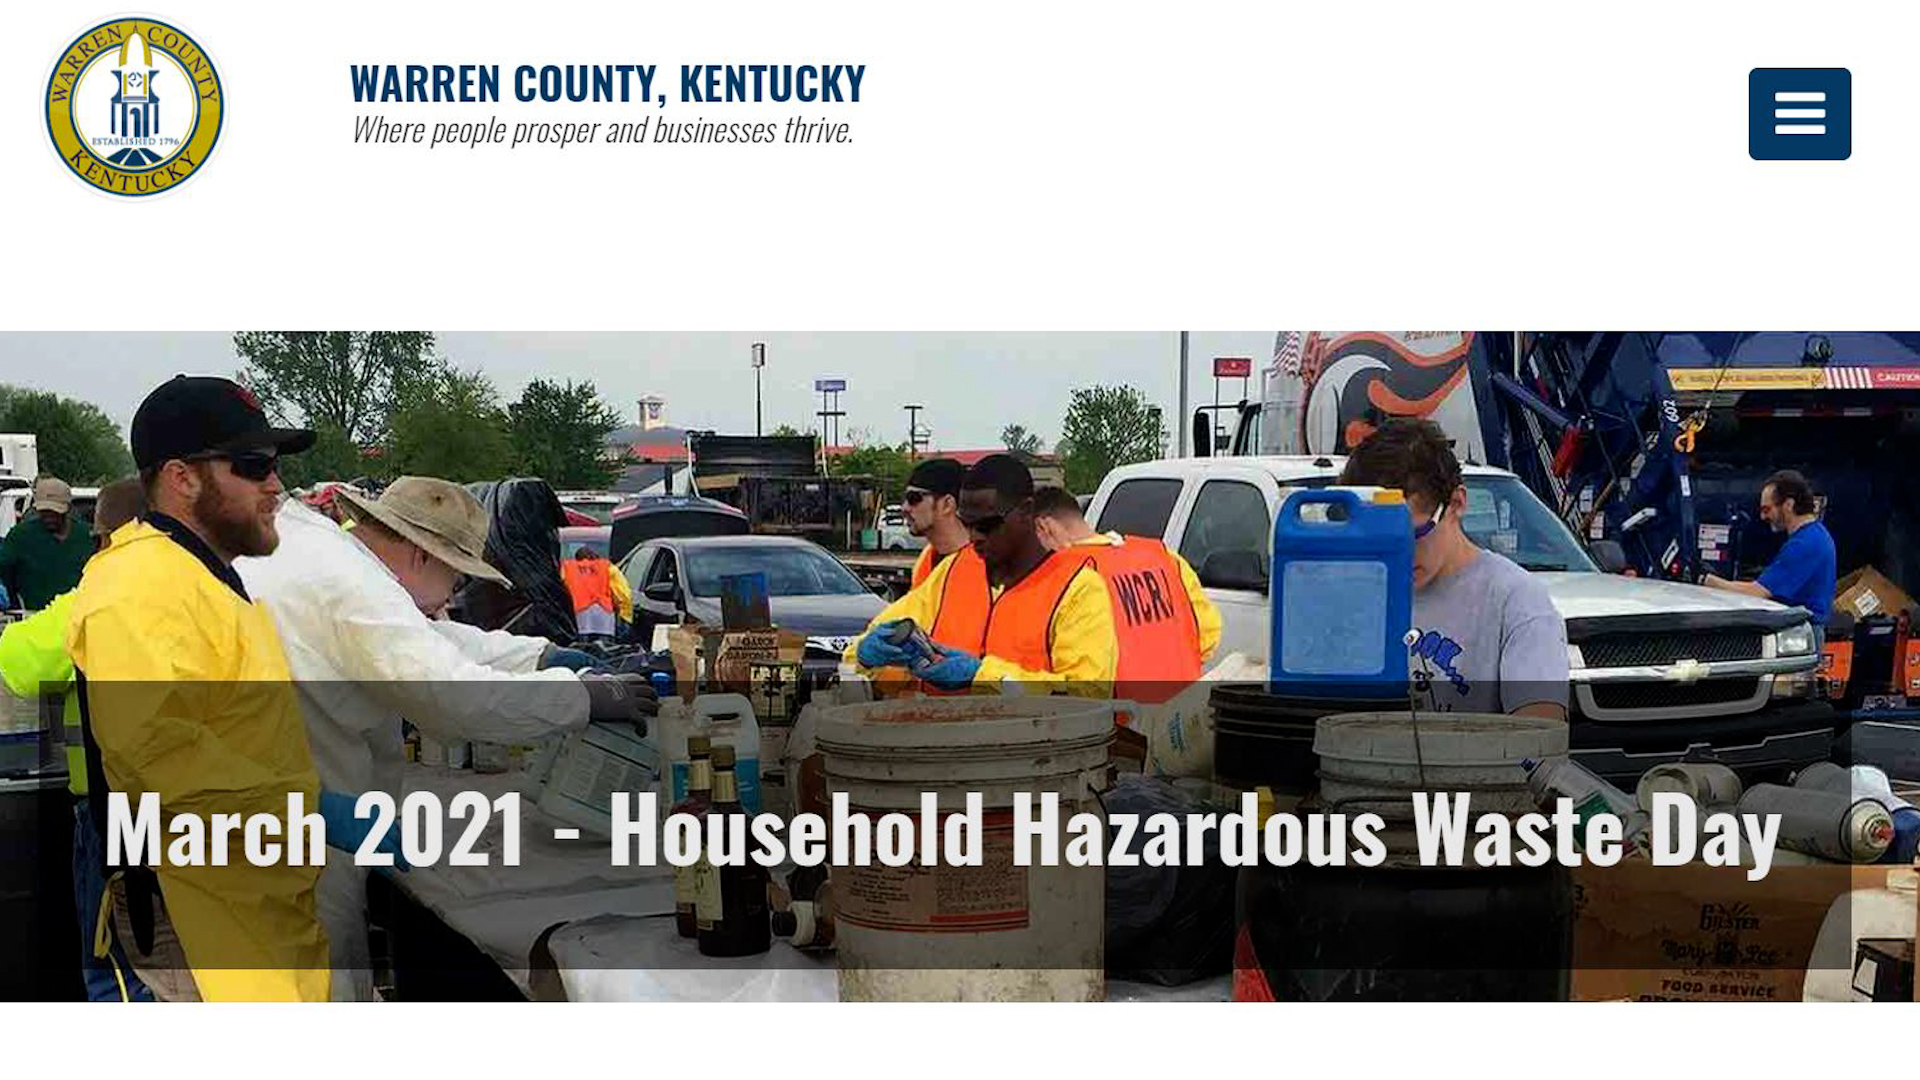 Household Hazardous Waste Day will resume in Warren County this year